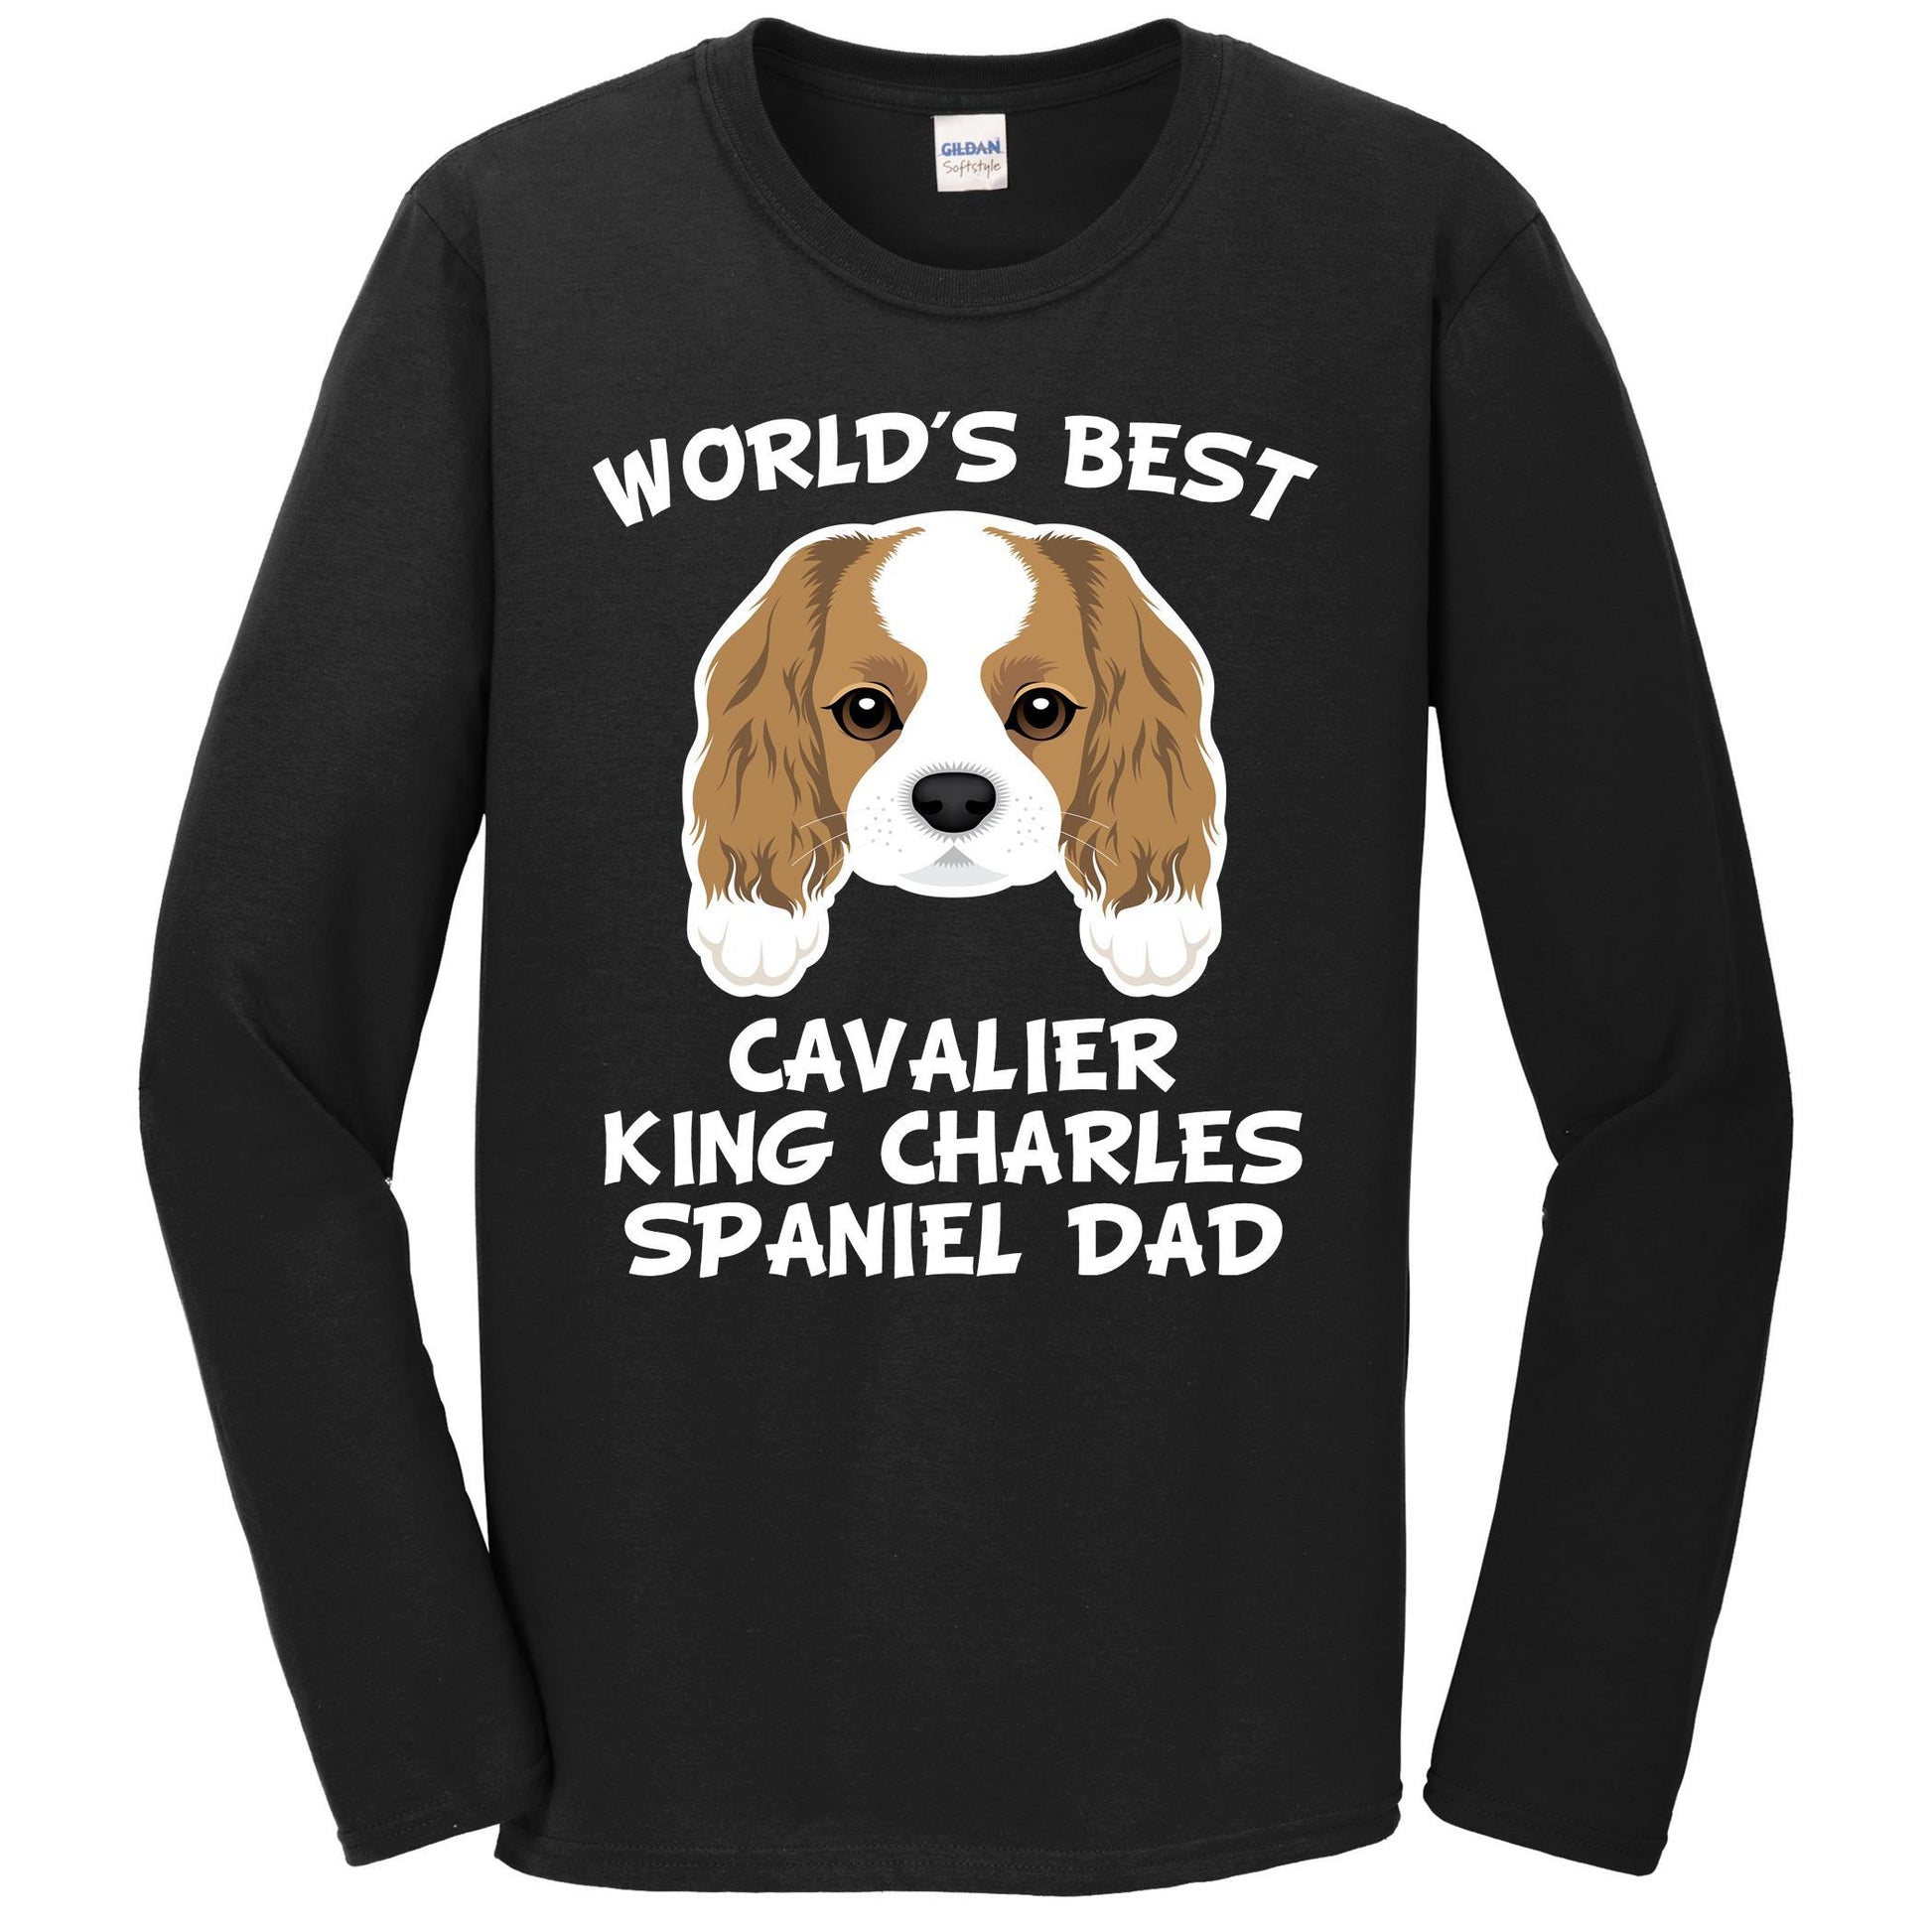 Cavalier King Charles Spaniel - Cavalier King Charles Spaniel - T-Shirt